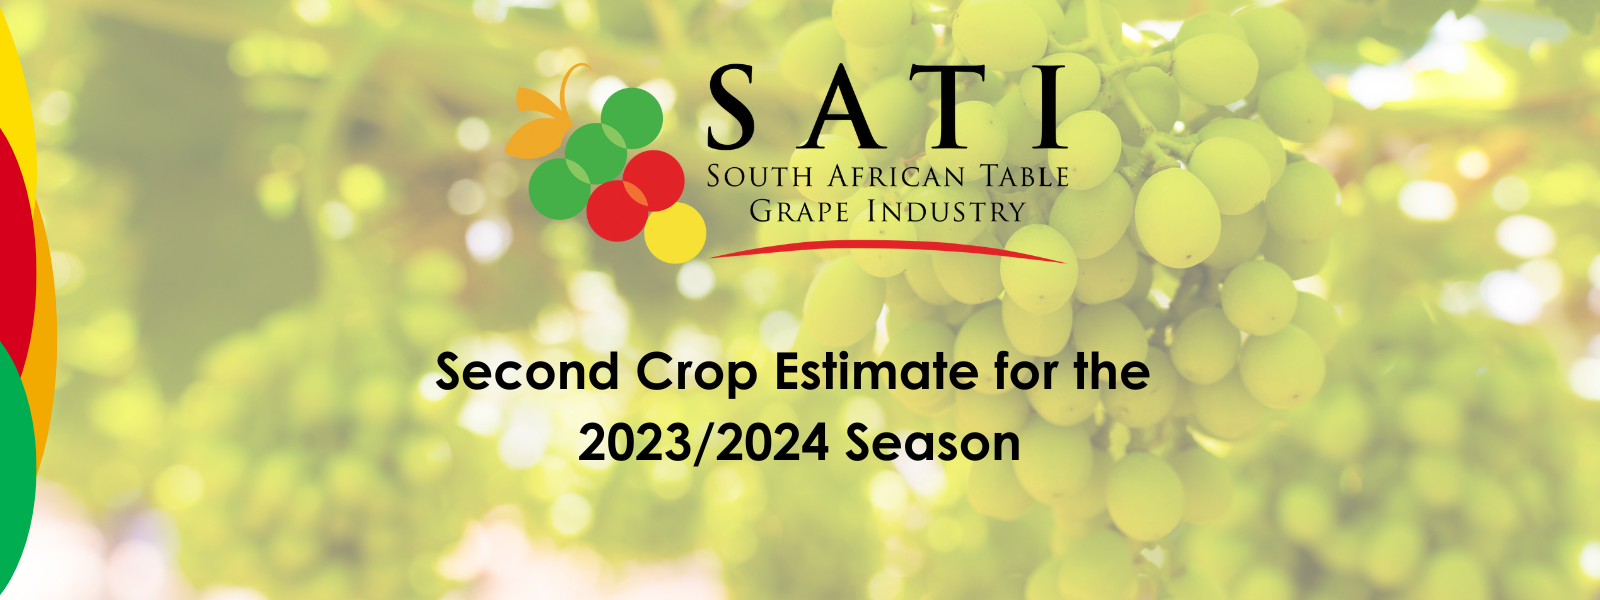 Second Crop Estimate (1600 X 900 Px) (2)